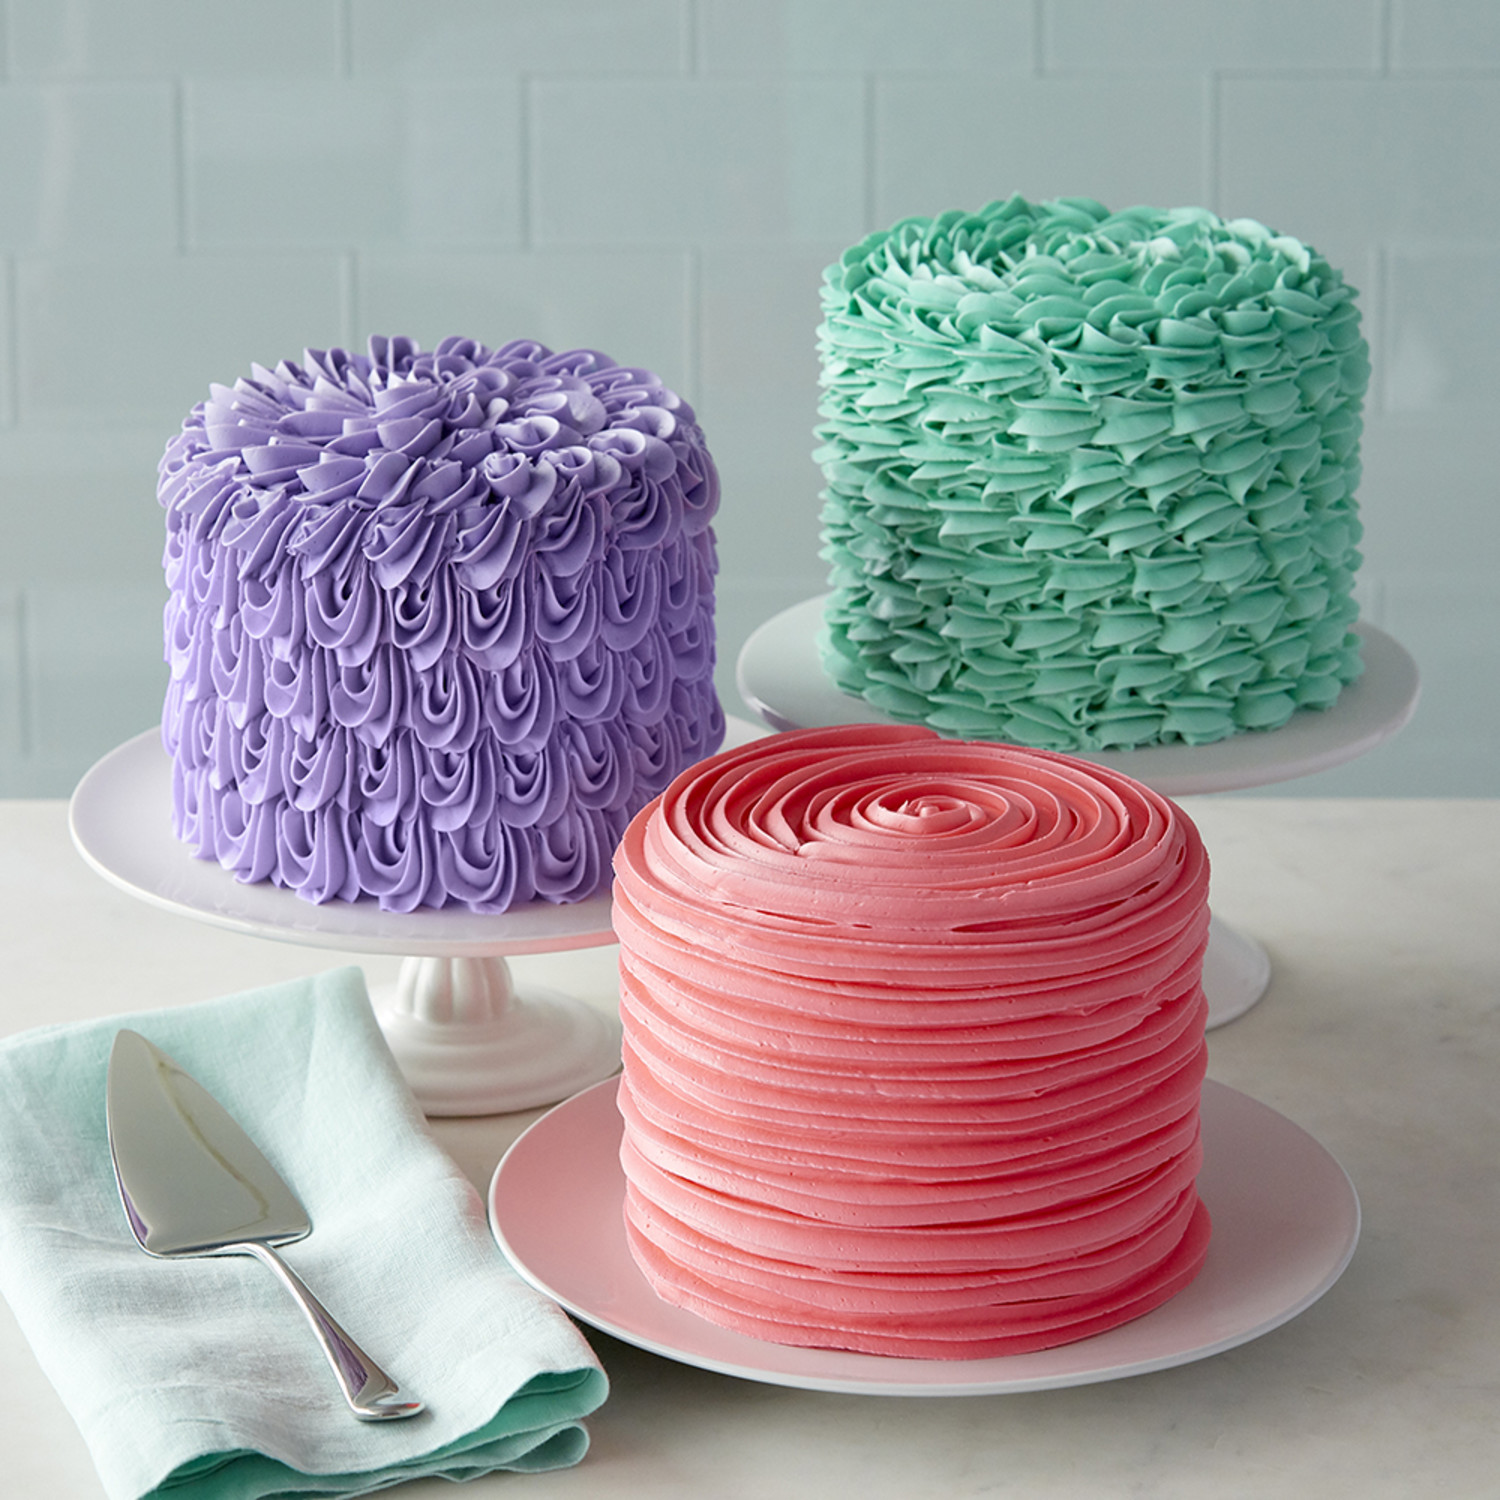 Cake Decorating Tips 101: Frosting Decorations | Bakepedia Tips